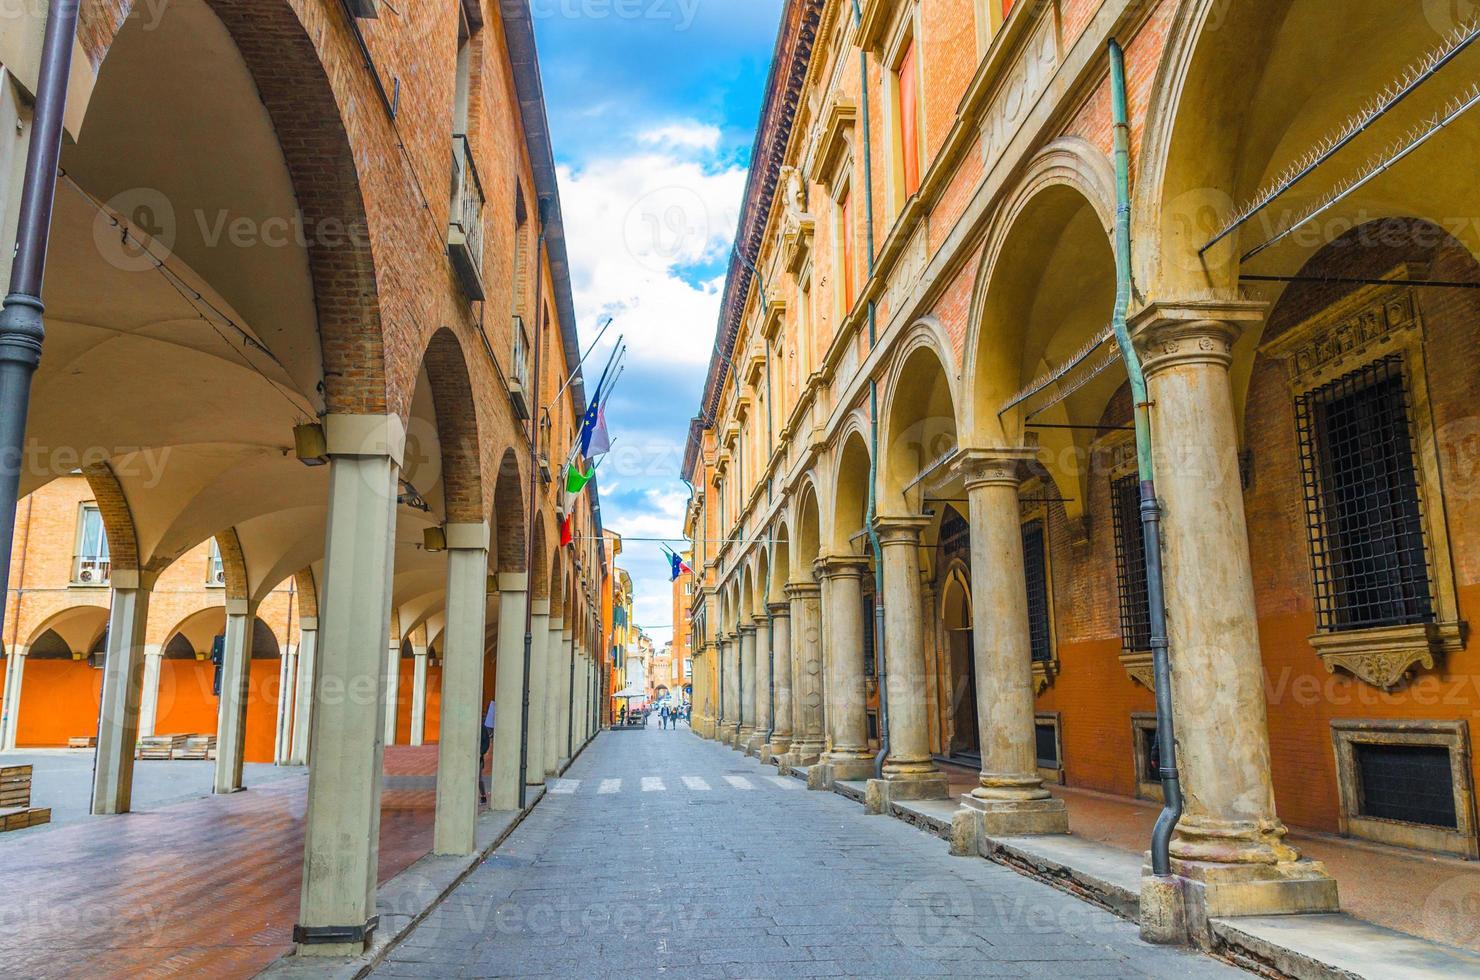 typisk italiensk gata, byggnader med kolonner, palazzo poggi museum, sedan akademin foto